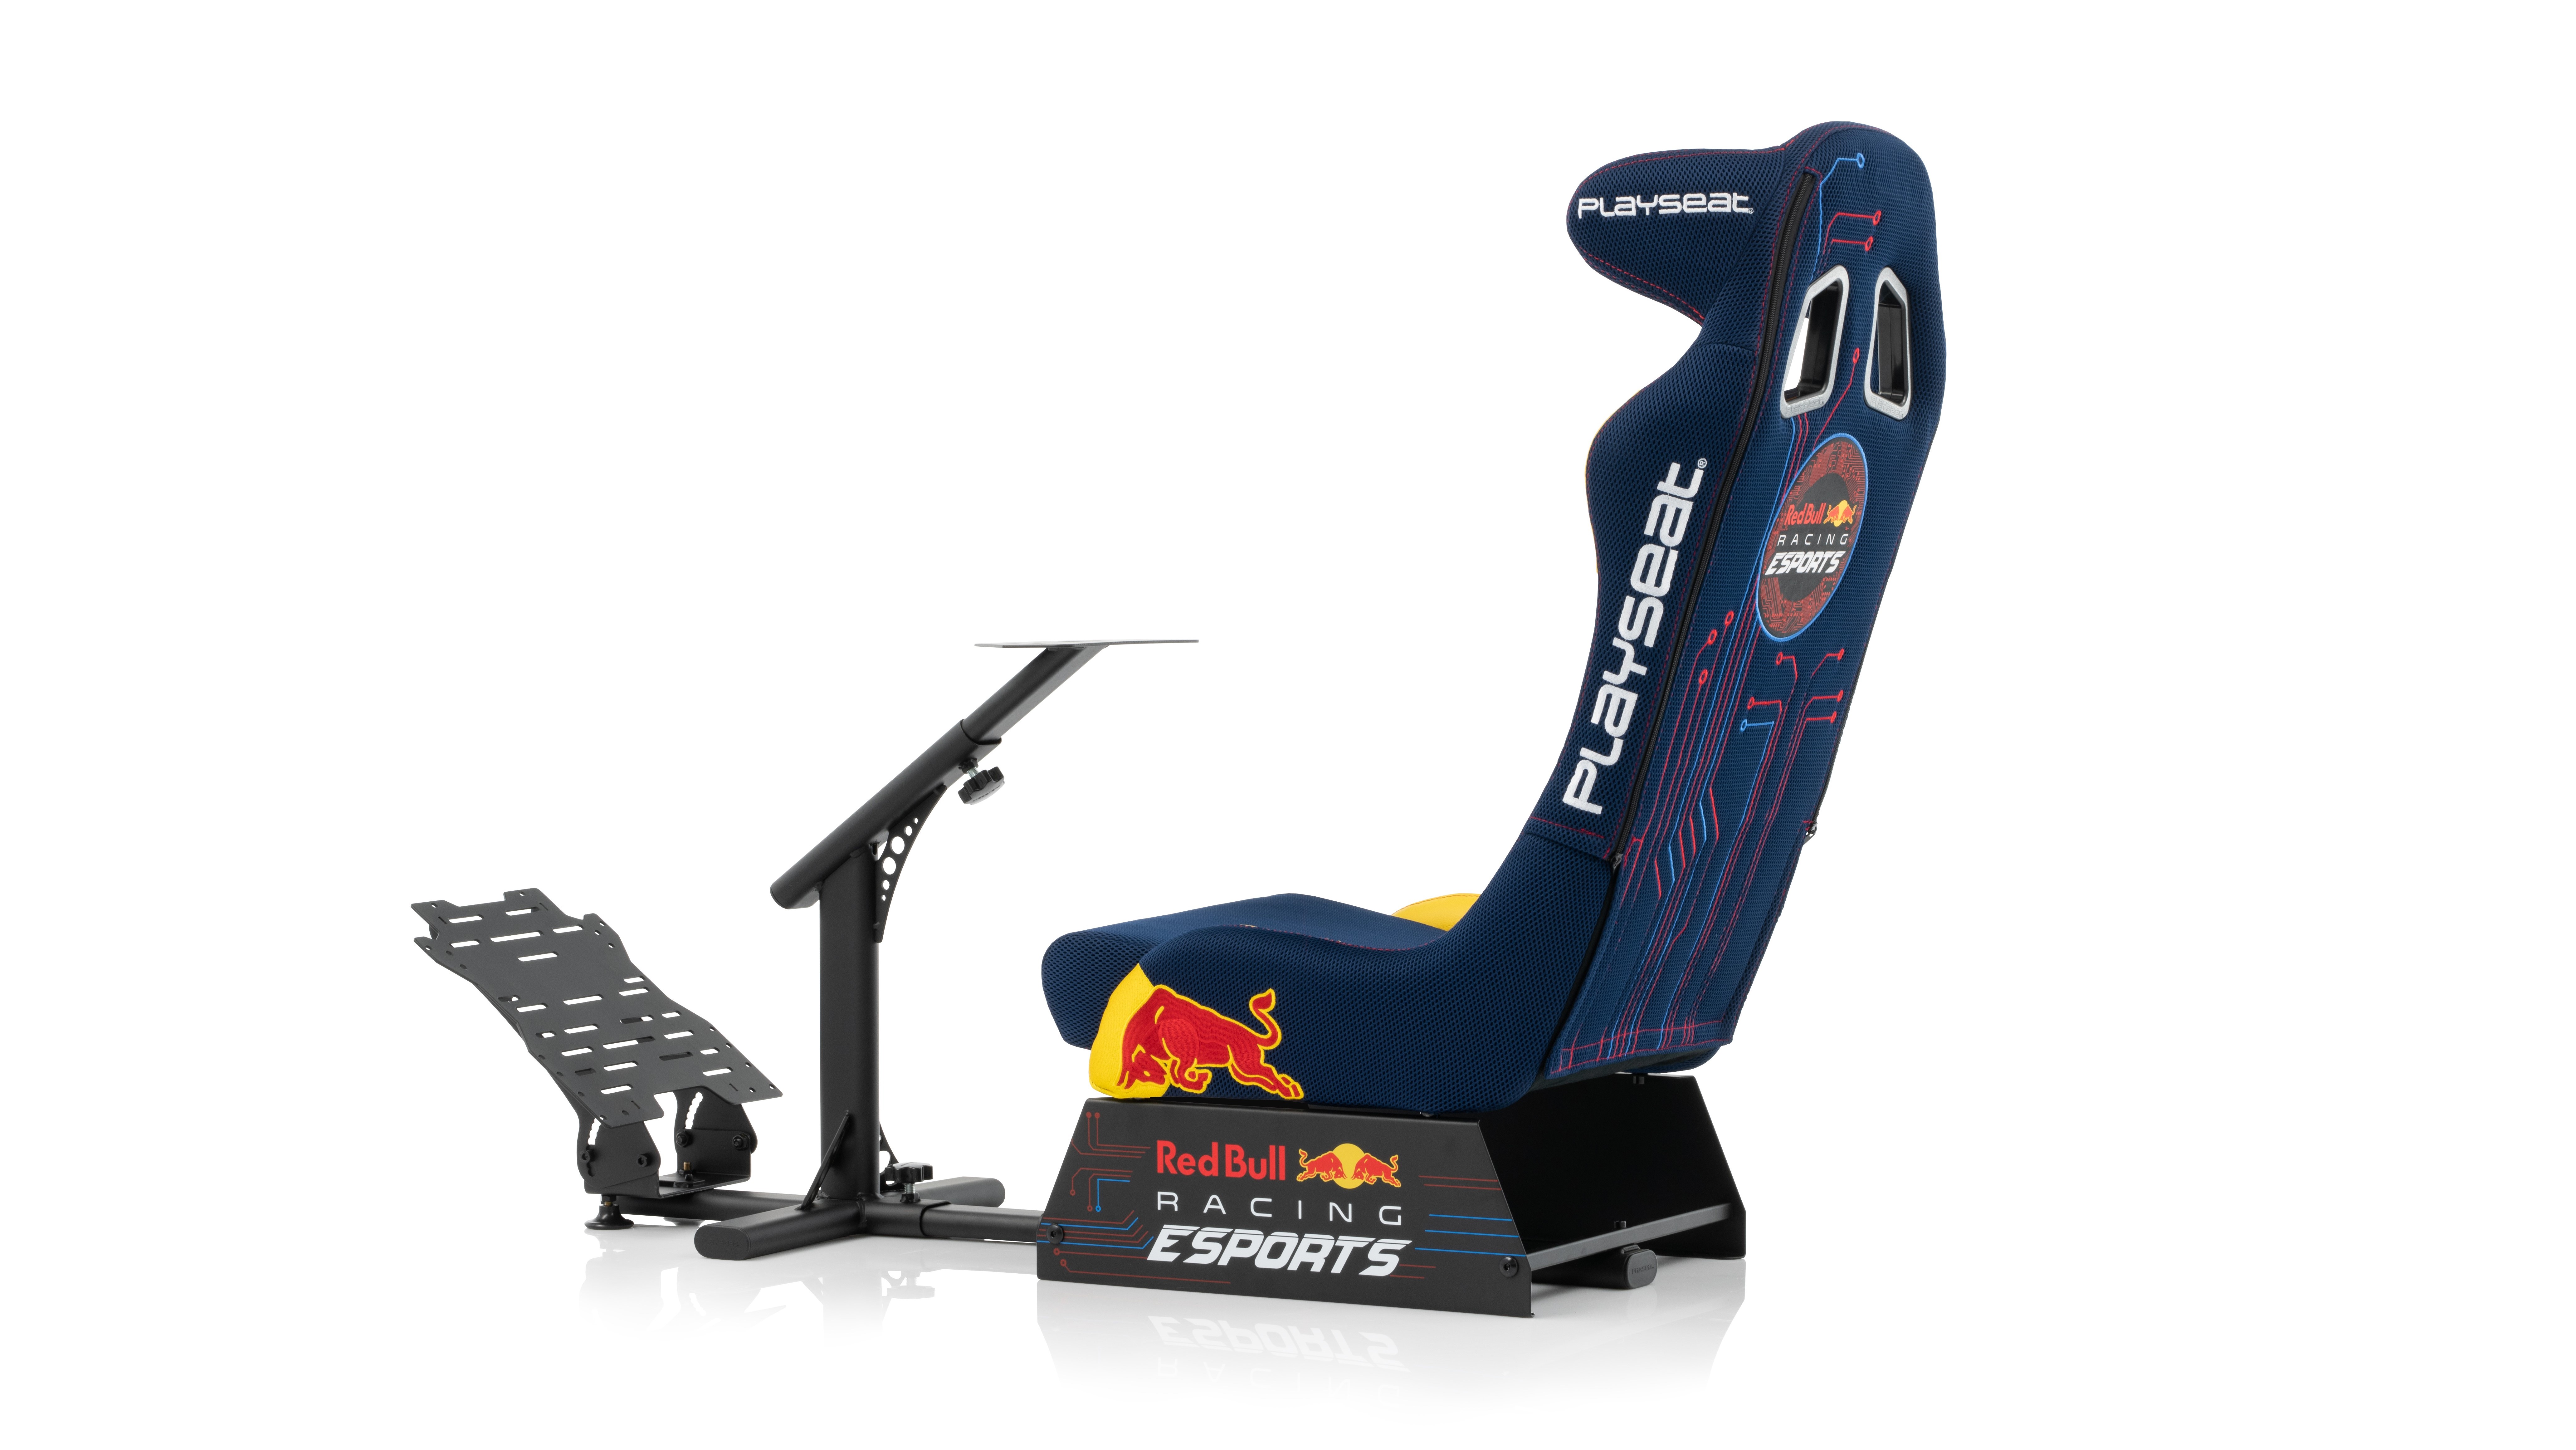 Playseat Evolution Pro Versenyszék, Red Bull Racing Esports kivitel